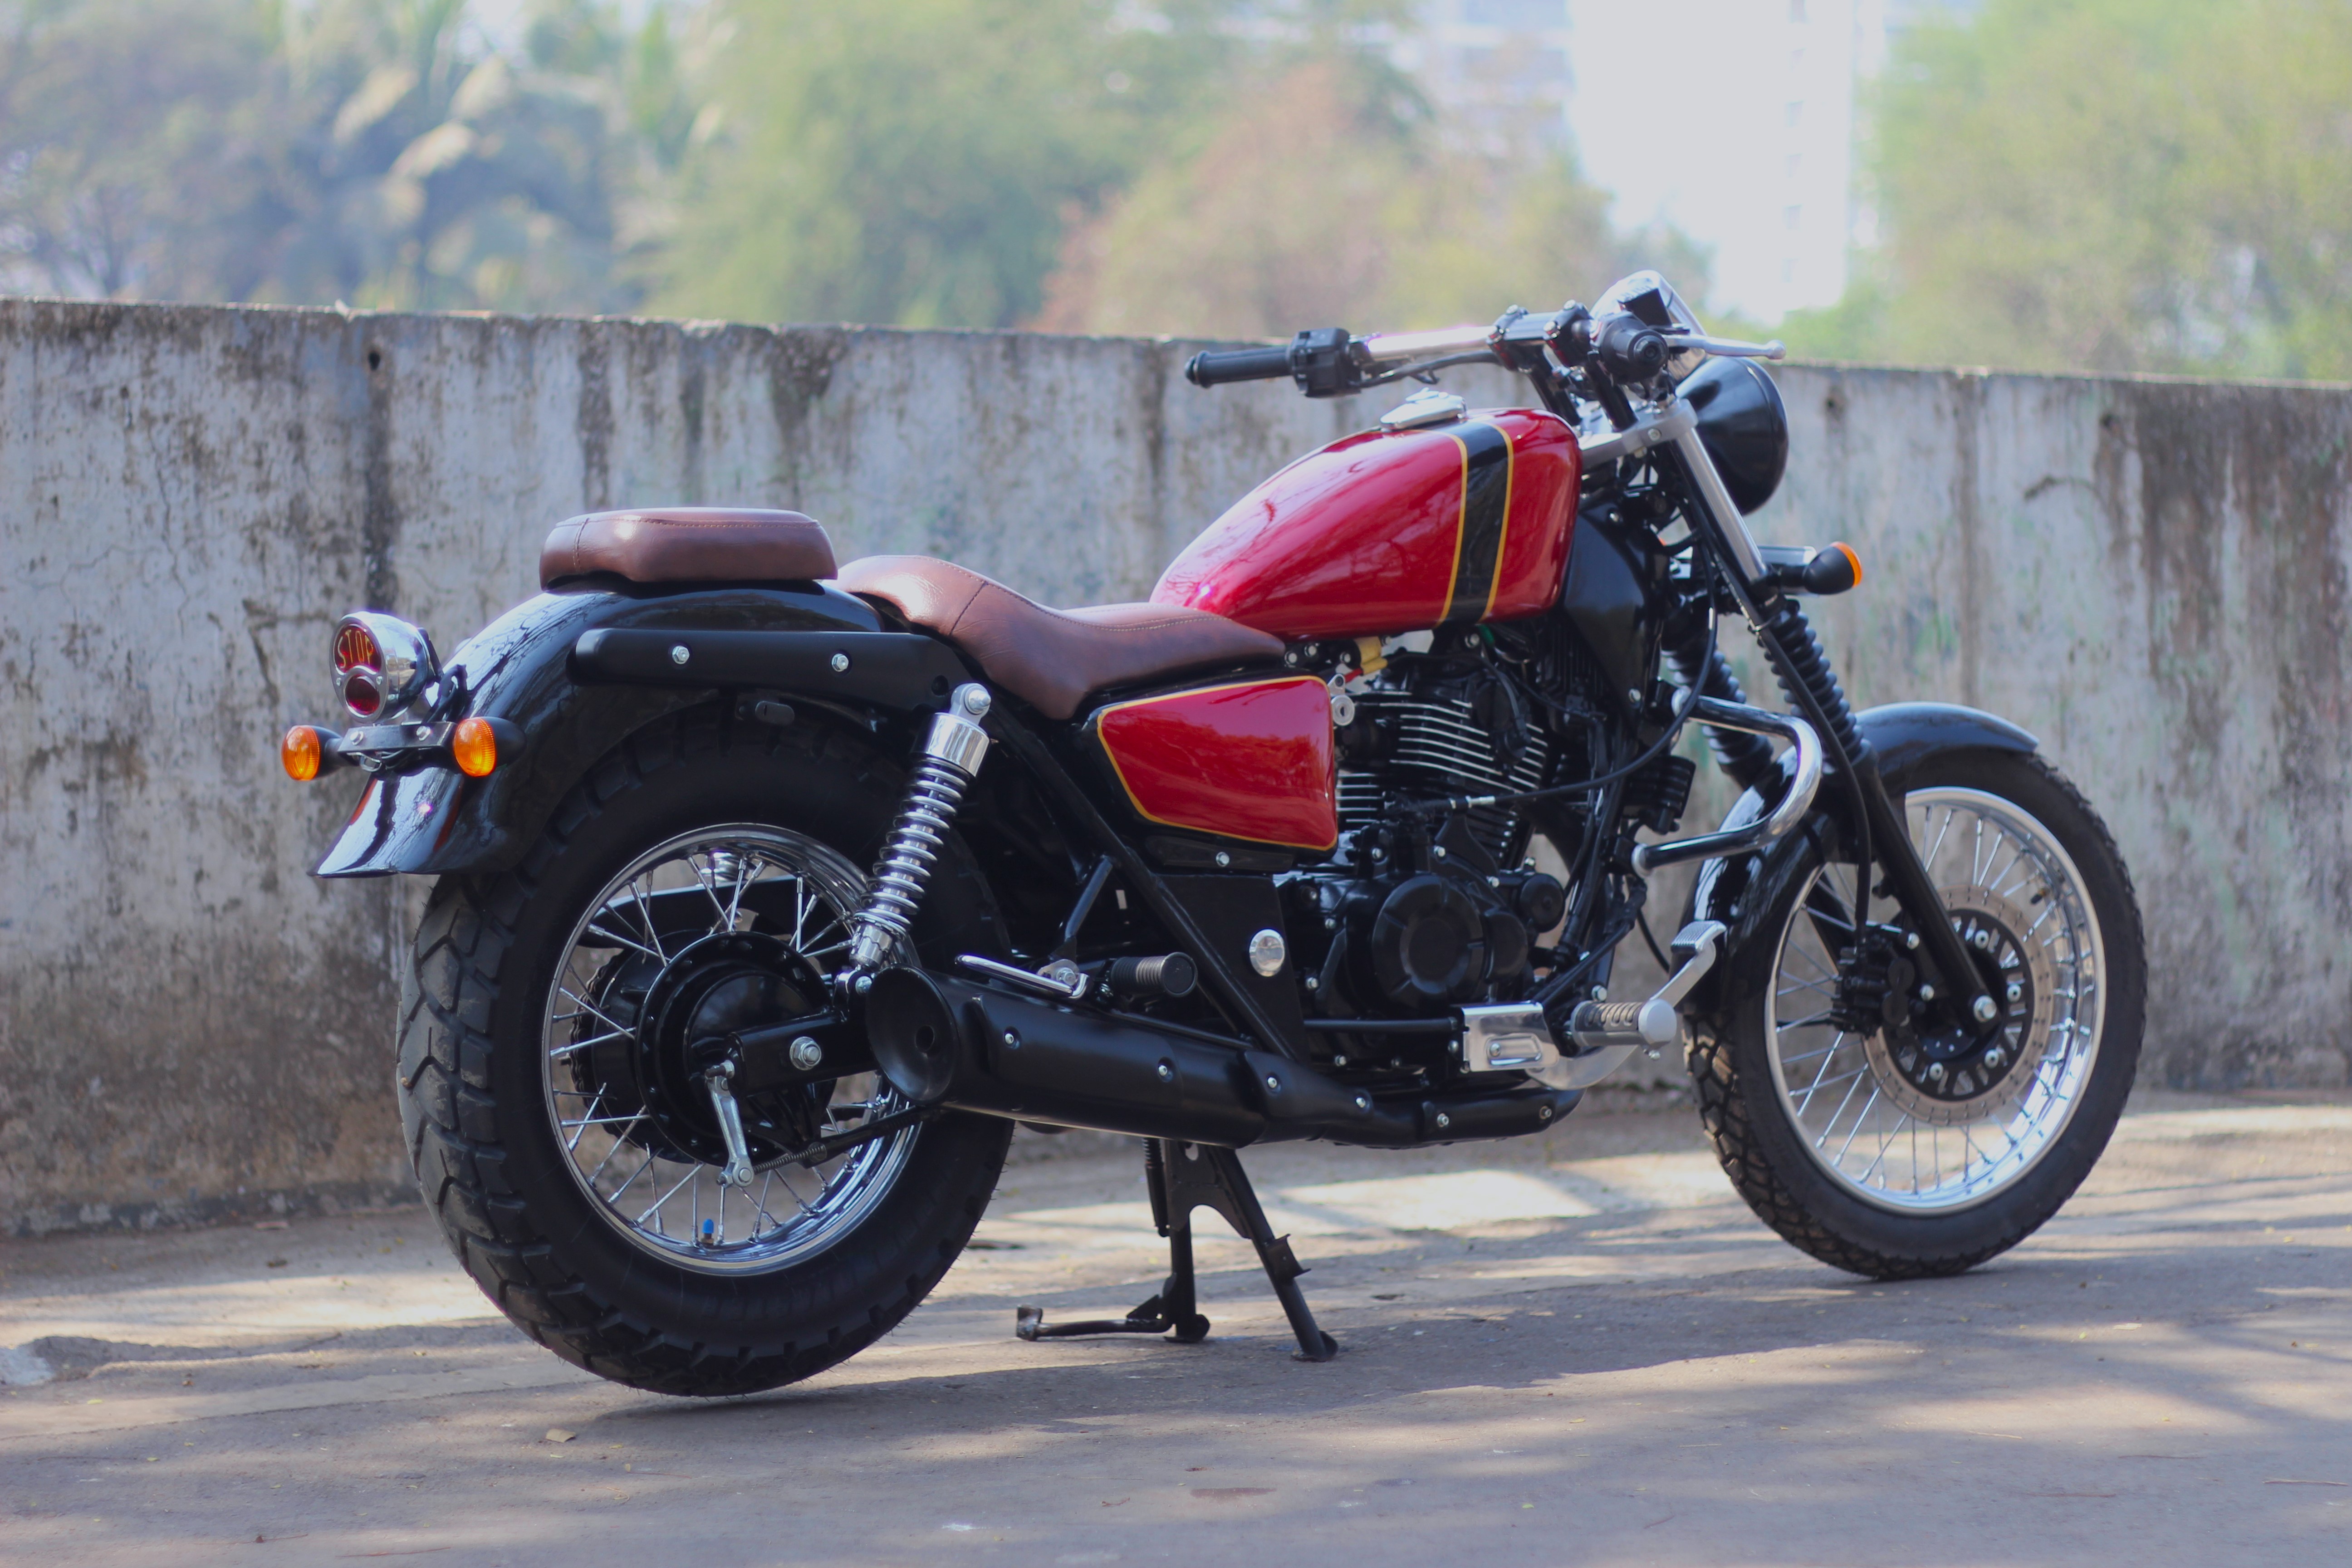 Meet Perfectly-Modified Bajaj Avenger Cruiser Motorcycle by JEDI Customs - side